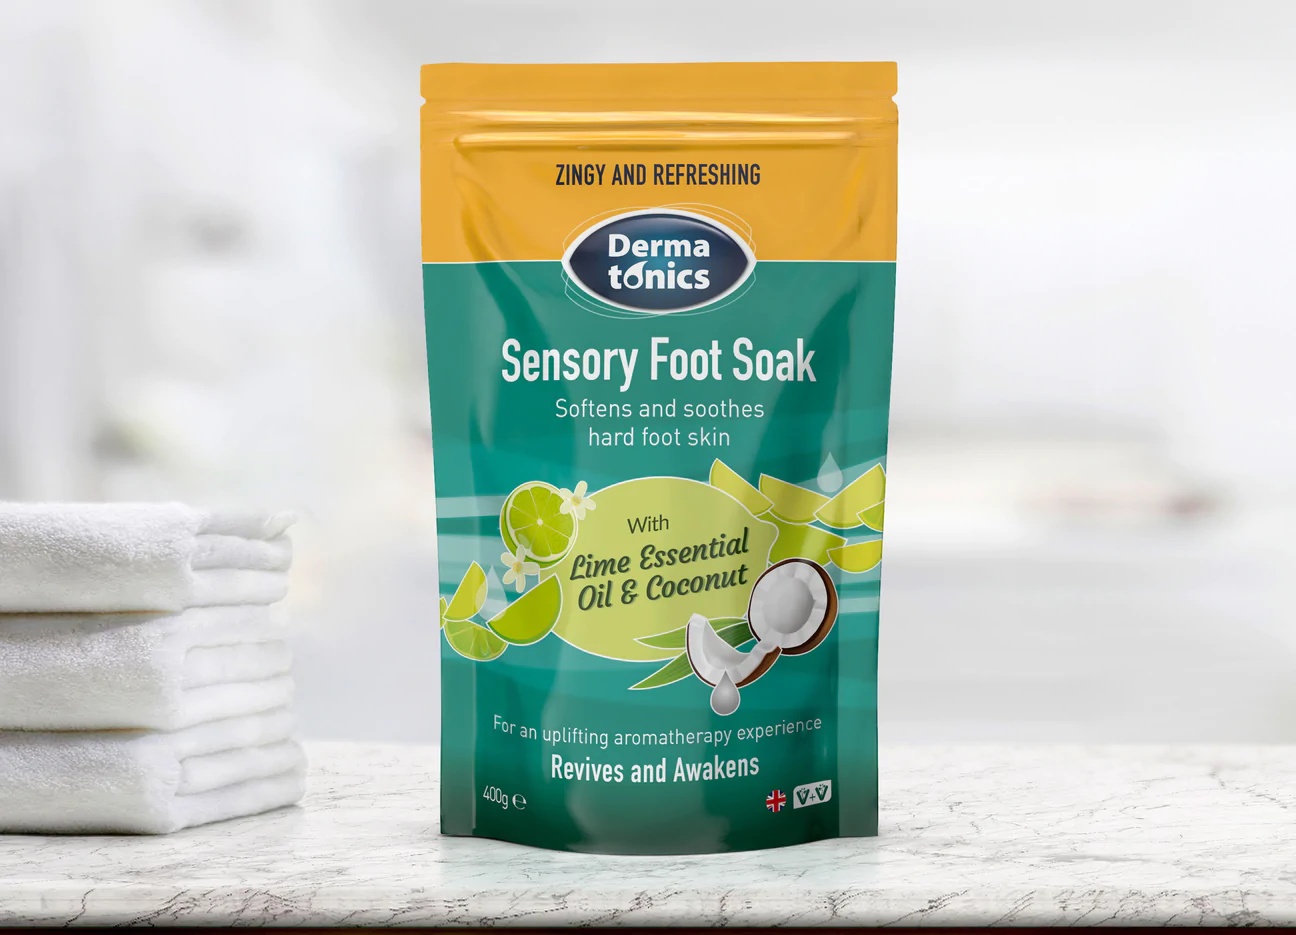 Dermatonics Sensory Foot Soak to soften and soothe hard foot skin